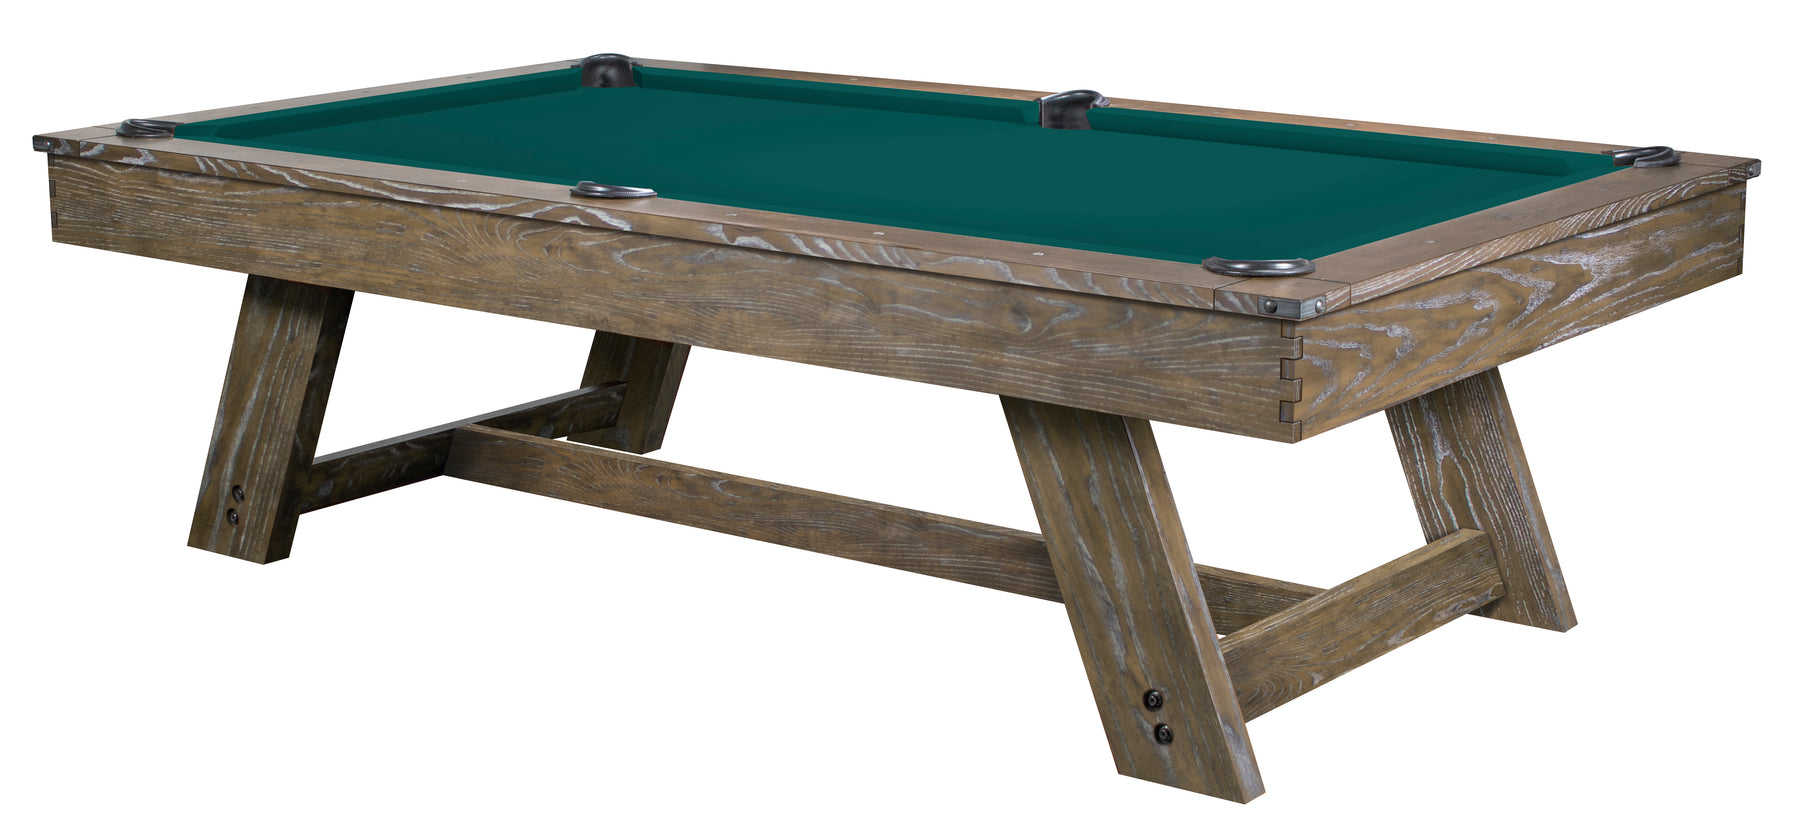 8' Legacy Billiards Barren Pool Table